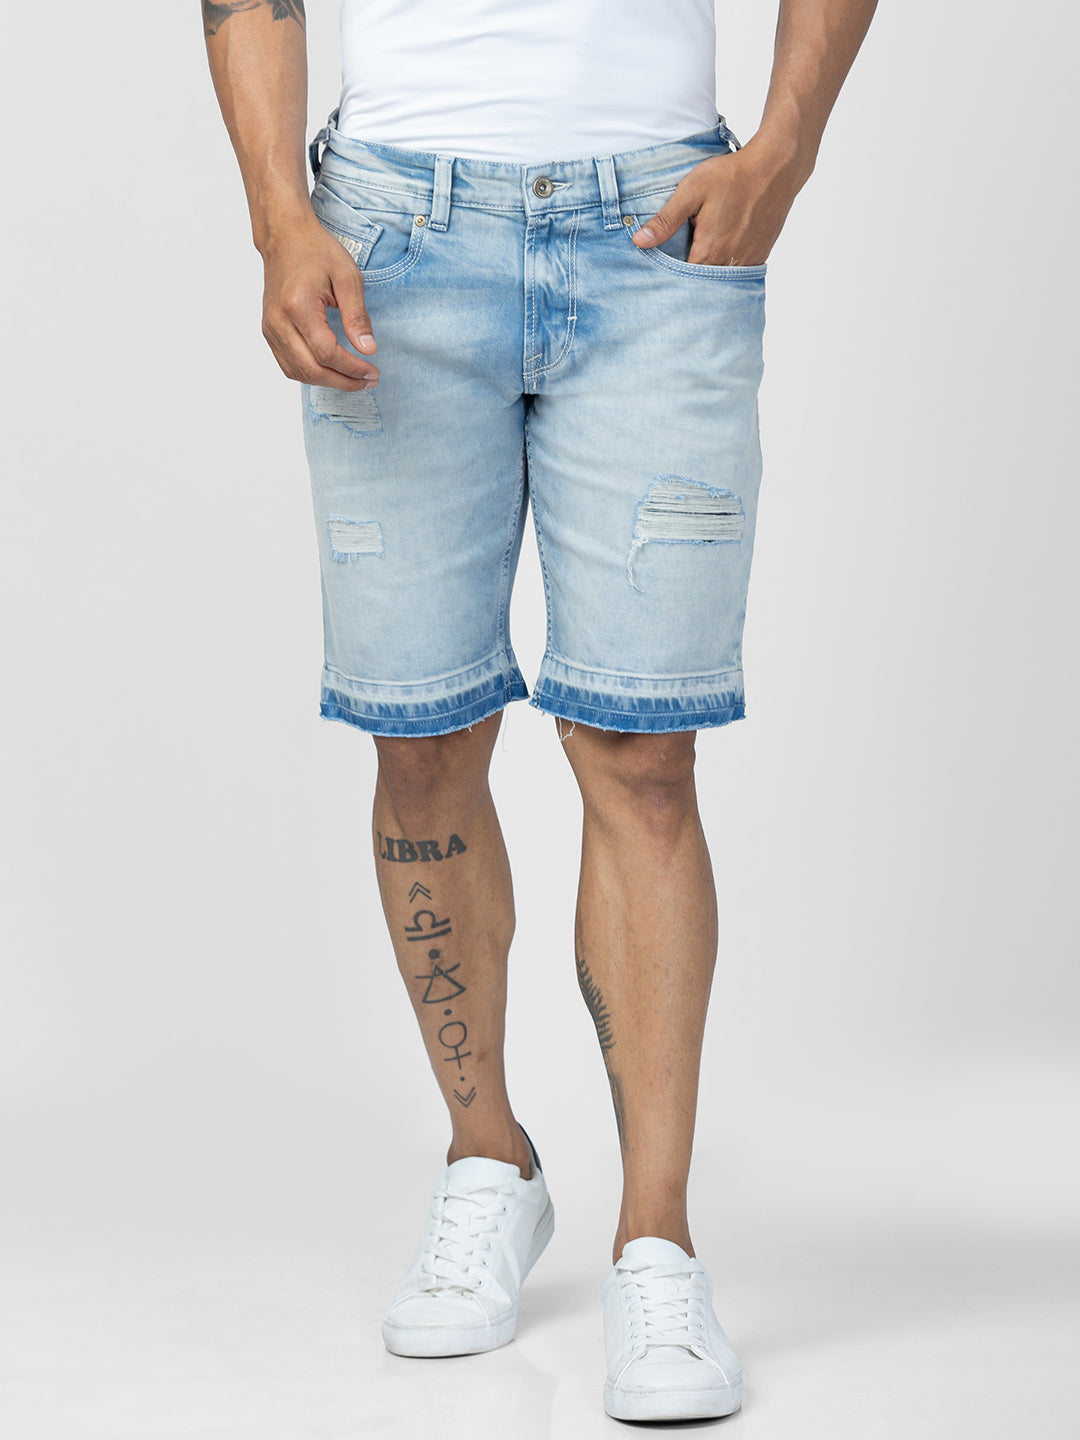 Men Summer Jeans Denim Shorts Loose Fit Distressed Ripped Half Pants Frayed  | eBay